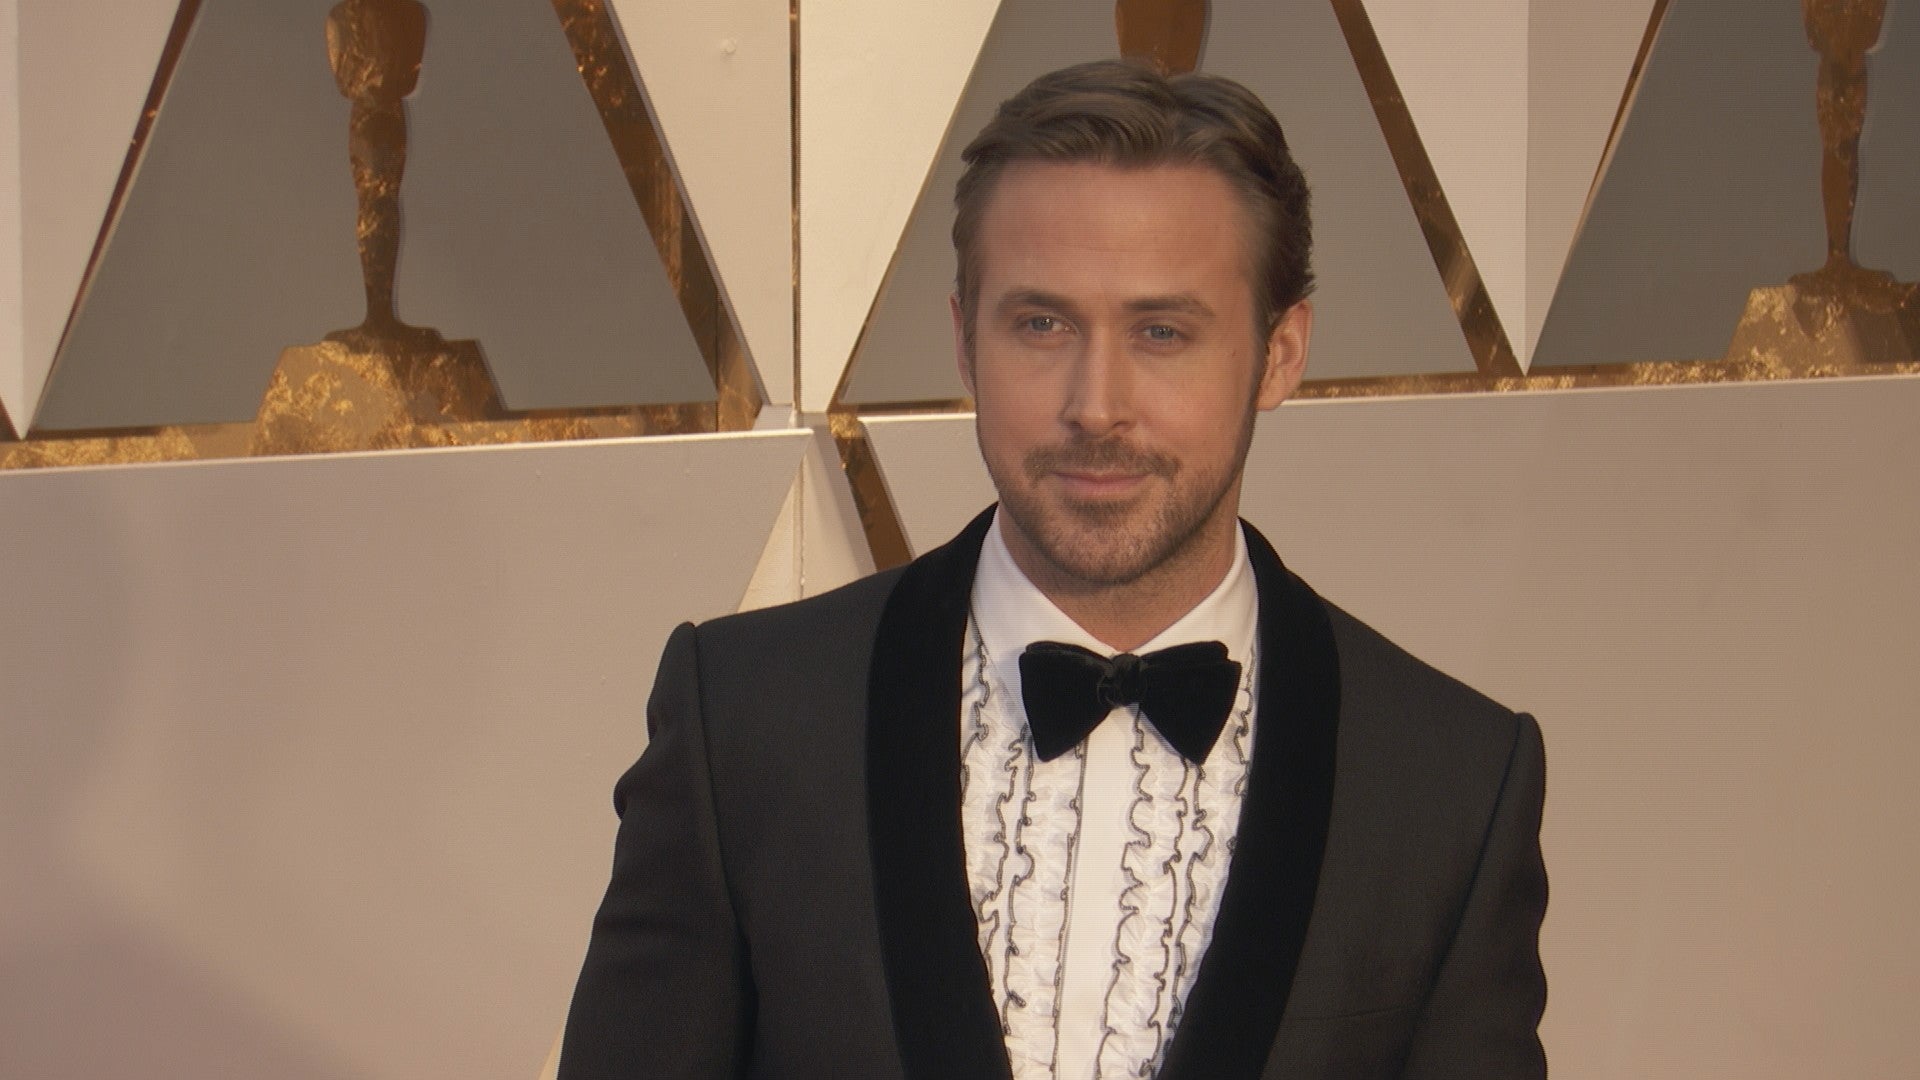 13 Best Ryan Gosling Gifts for 2018 - Unique Ryan Gosling